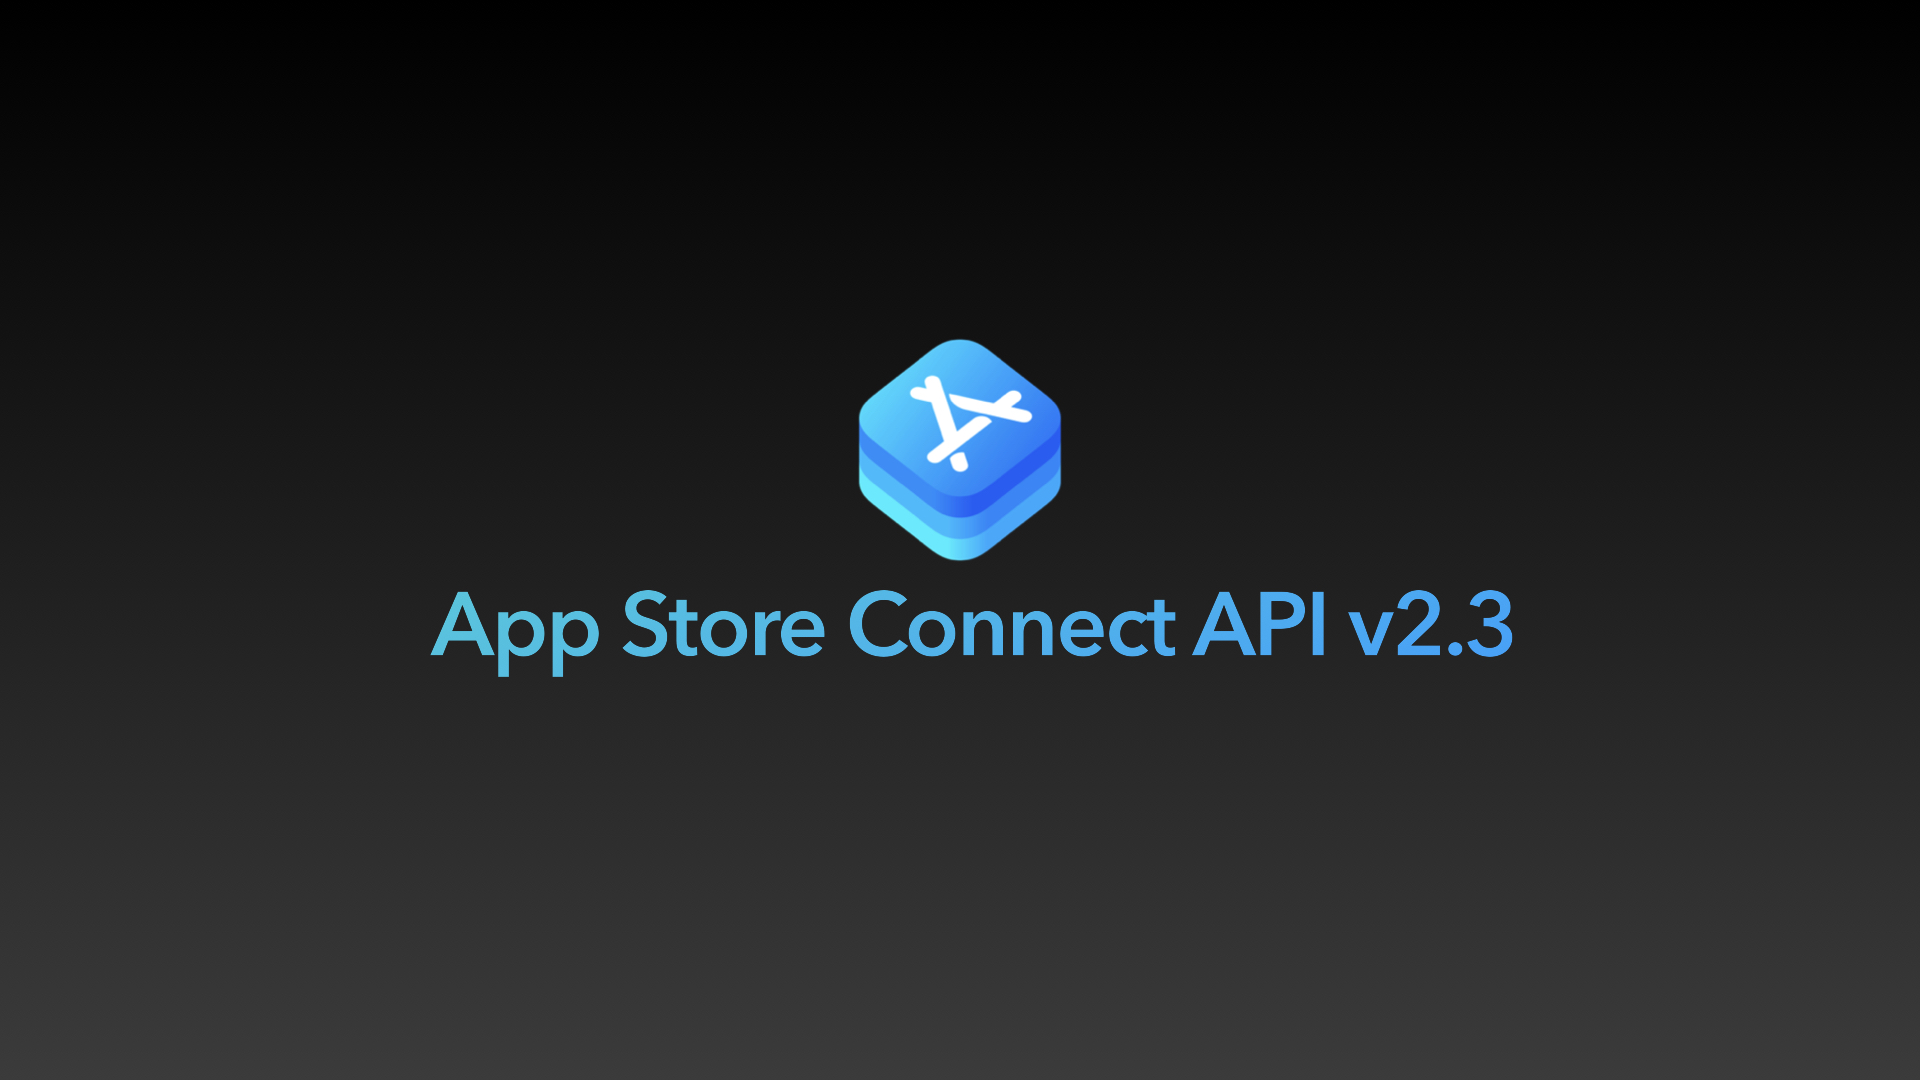 2023-AppStoreConnectAPI-v2.3-00